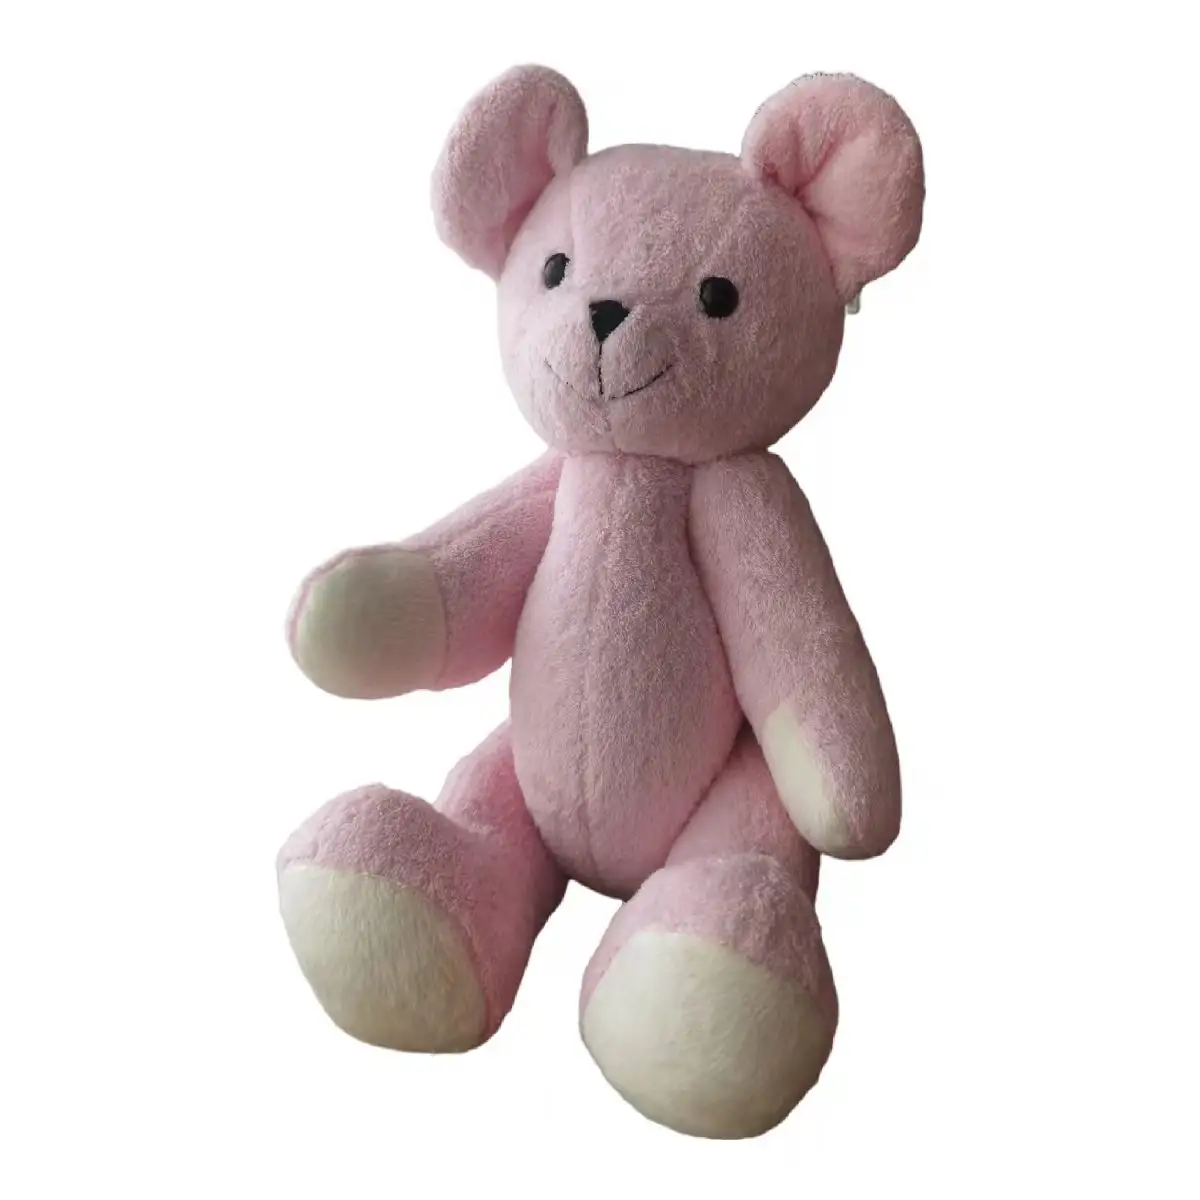 Handmade Animals Toy Oem Stuffed Toy Plush Soft Bear Stuffed Toy